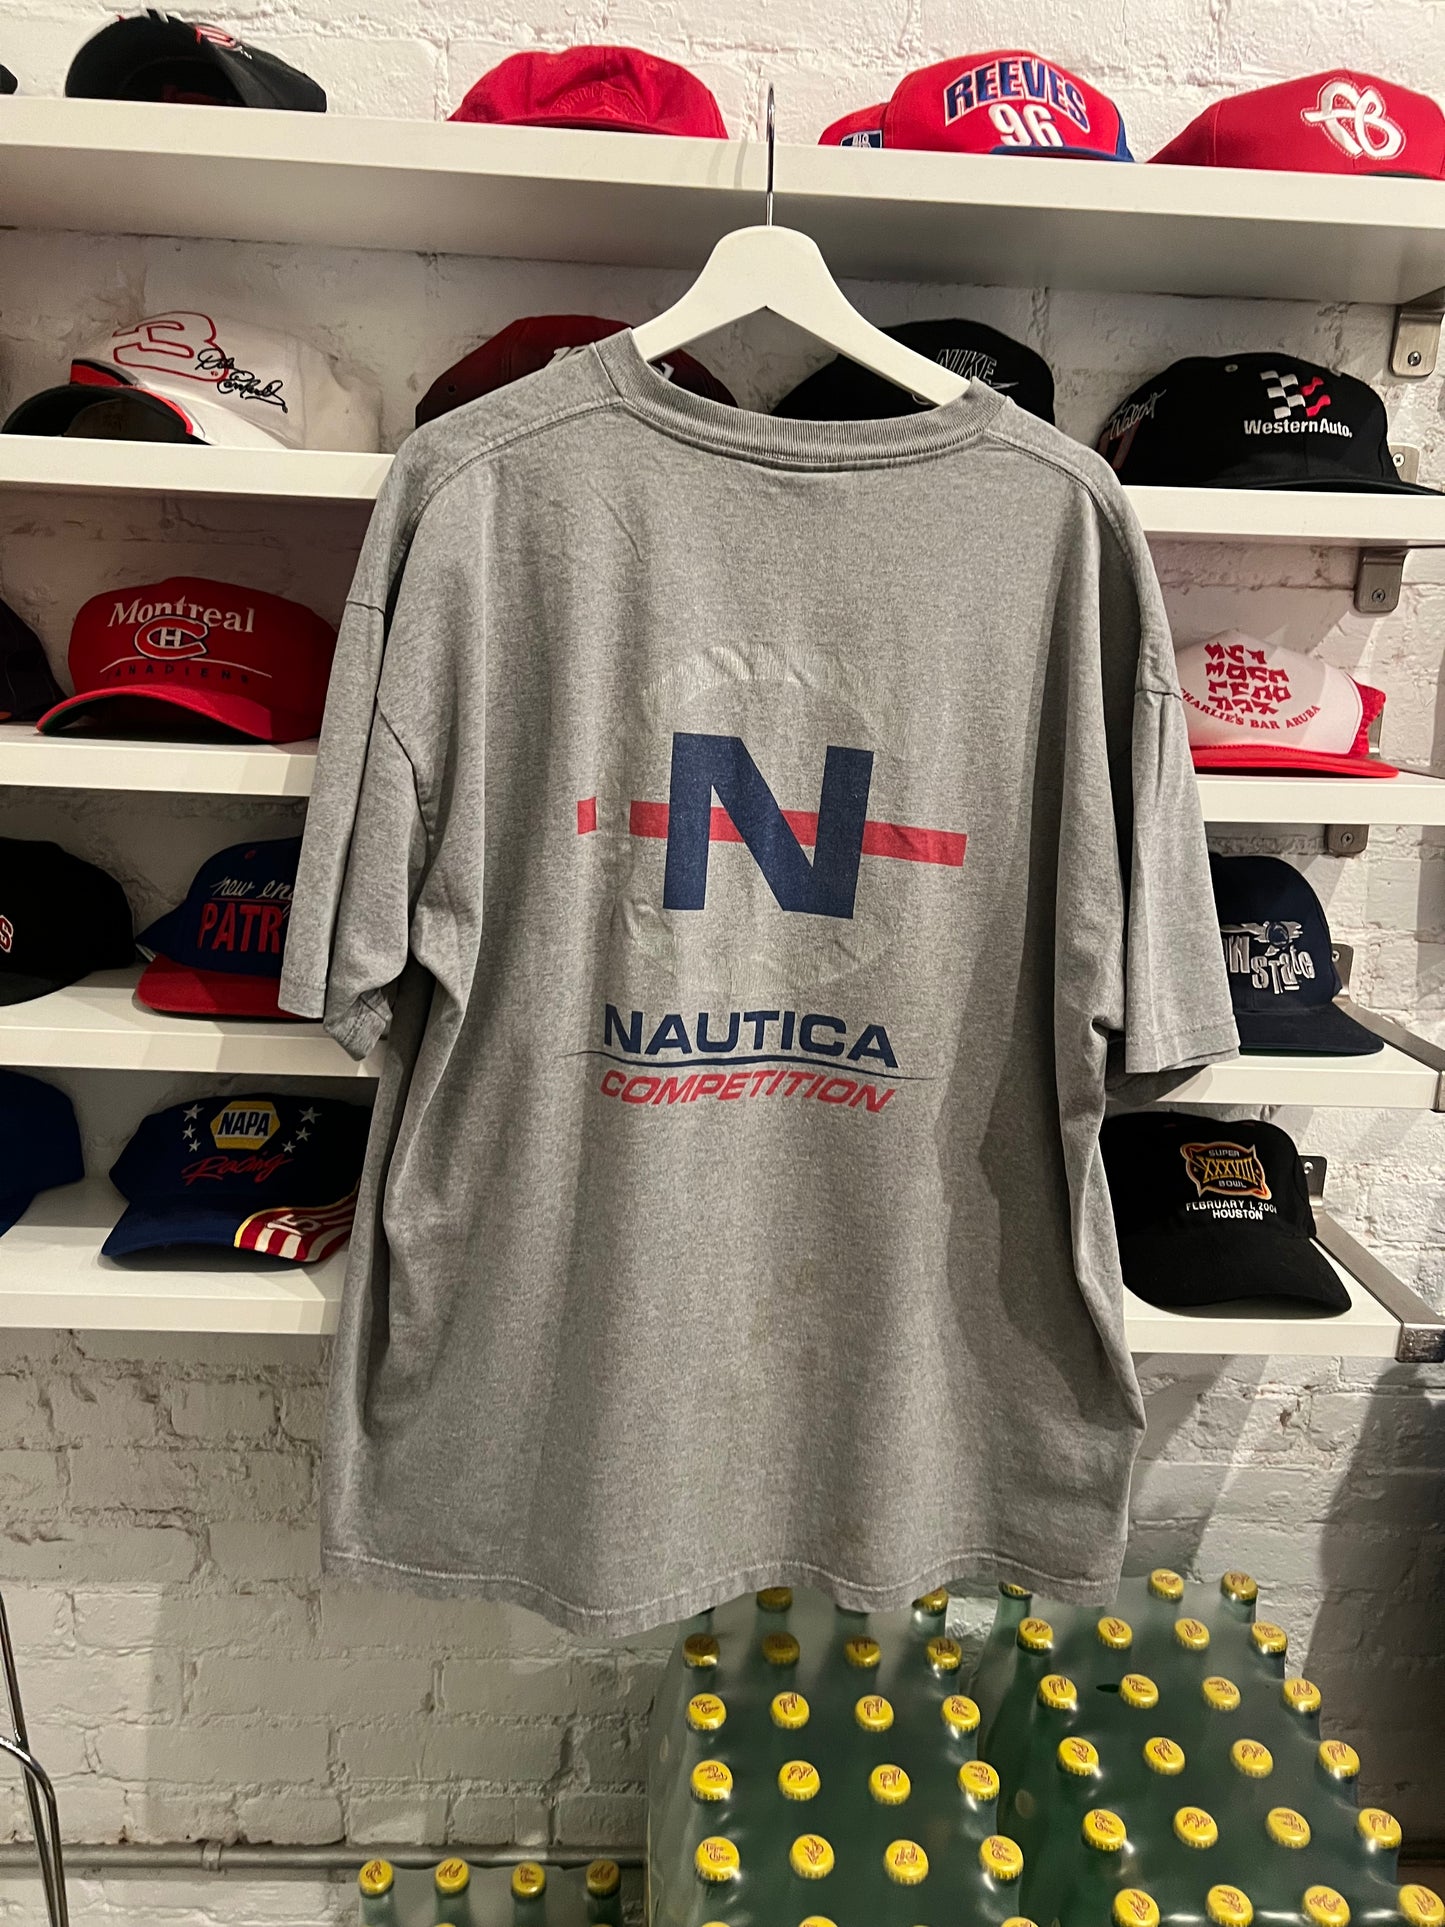 Nautica Competition T-shirt size 2XL